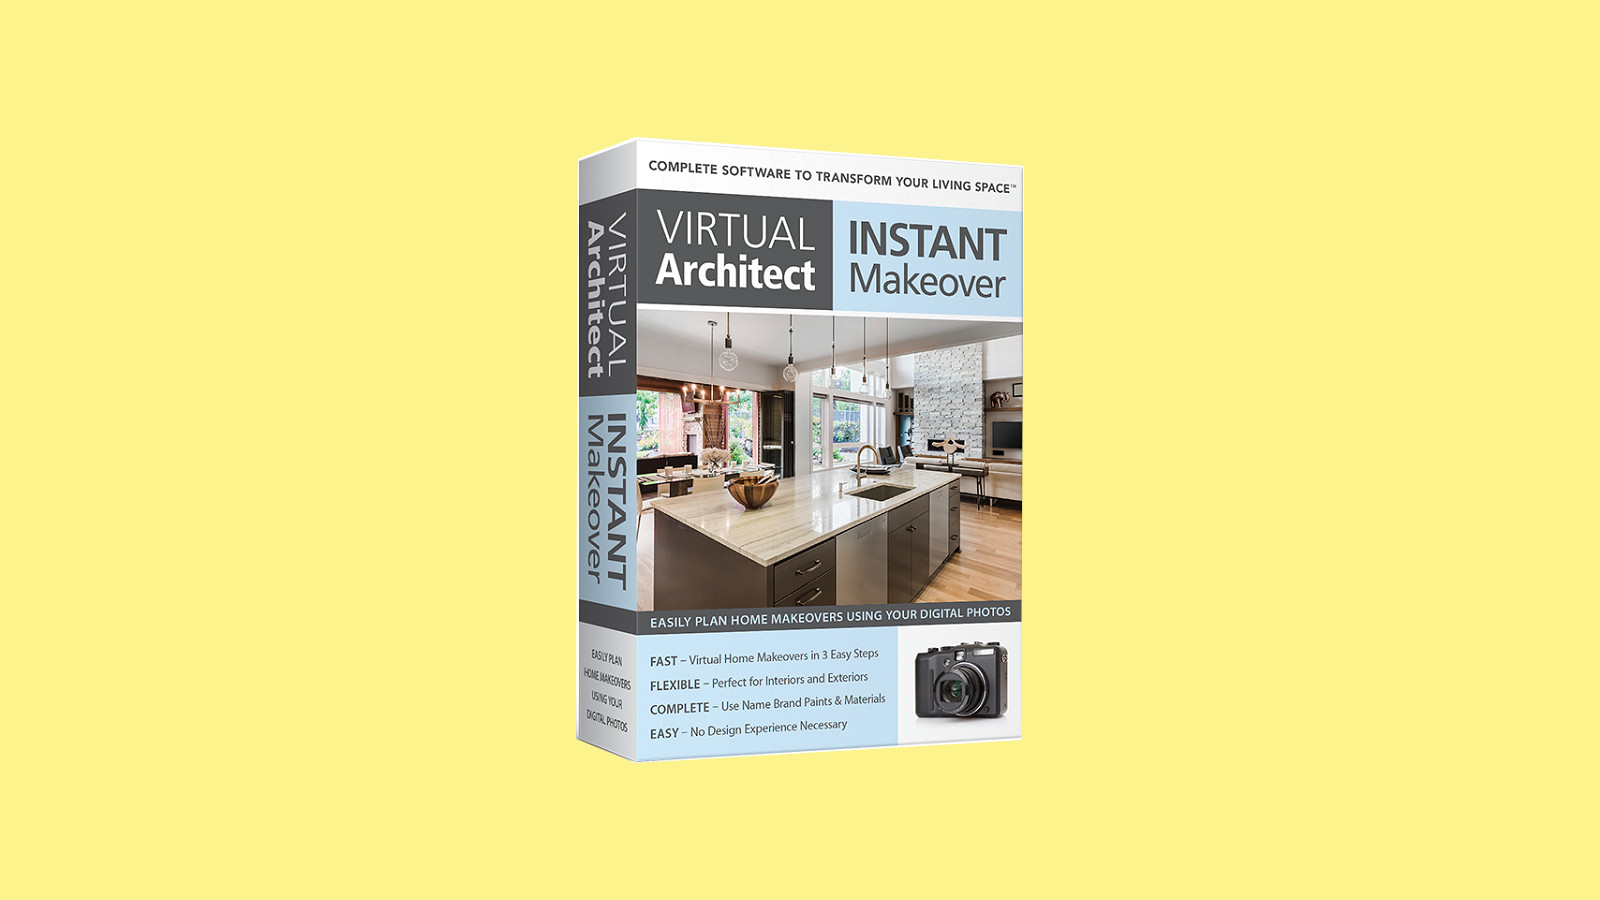 [$ 17.63] Virtual Architect Instant Makeover 2.0 CD Key